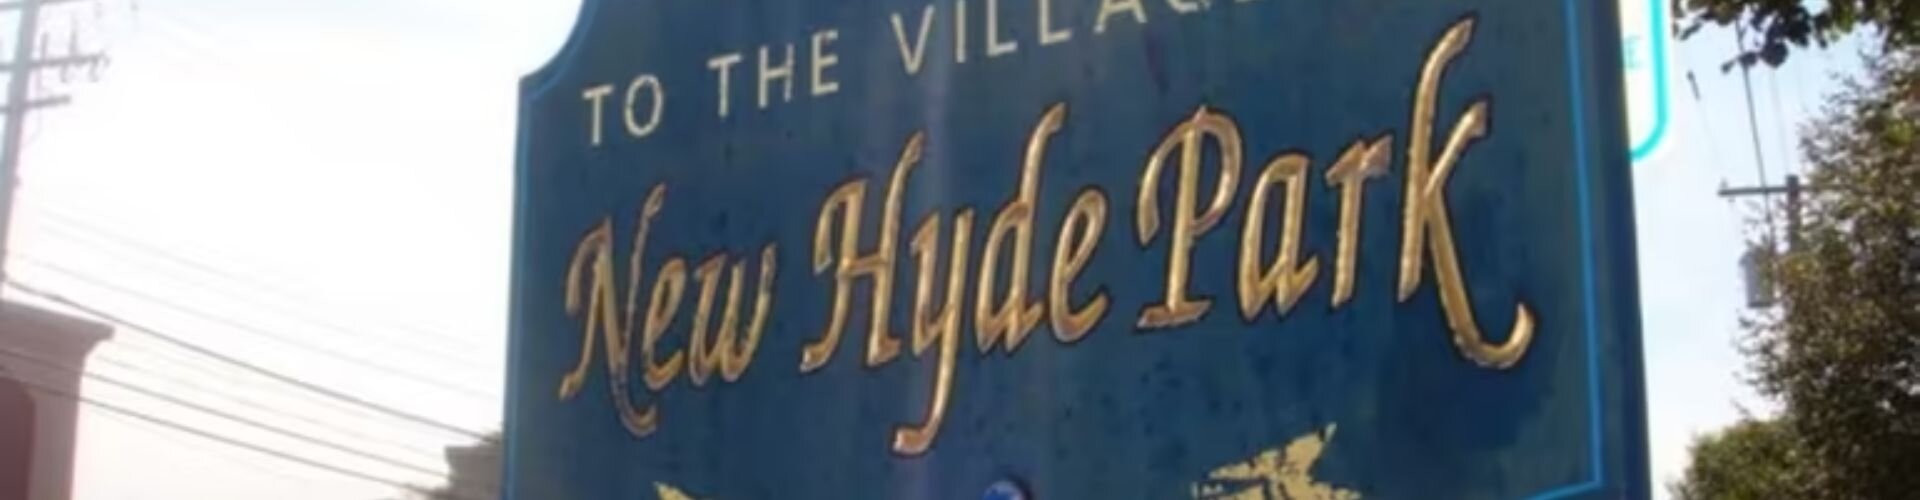 New Hyde Park - Cash Buyers in Long Island